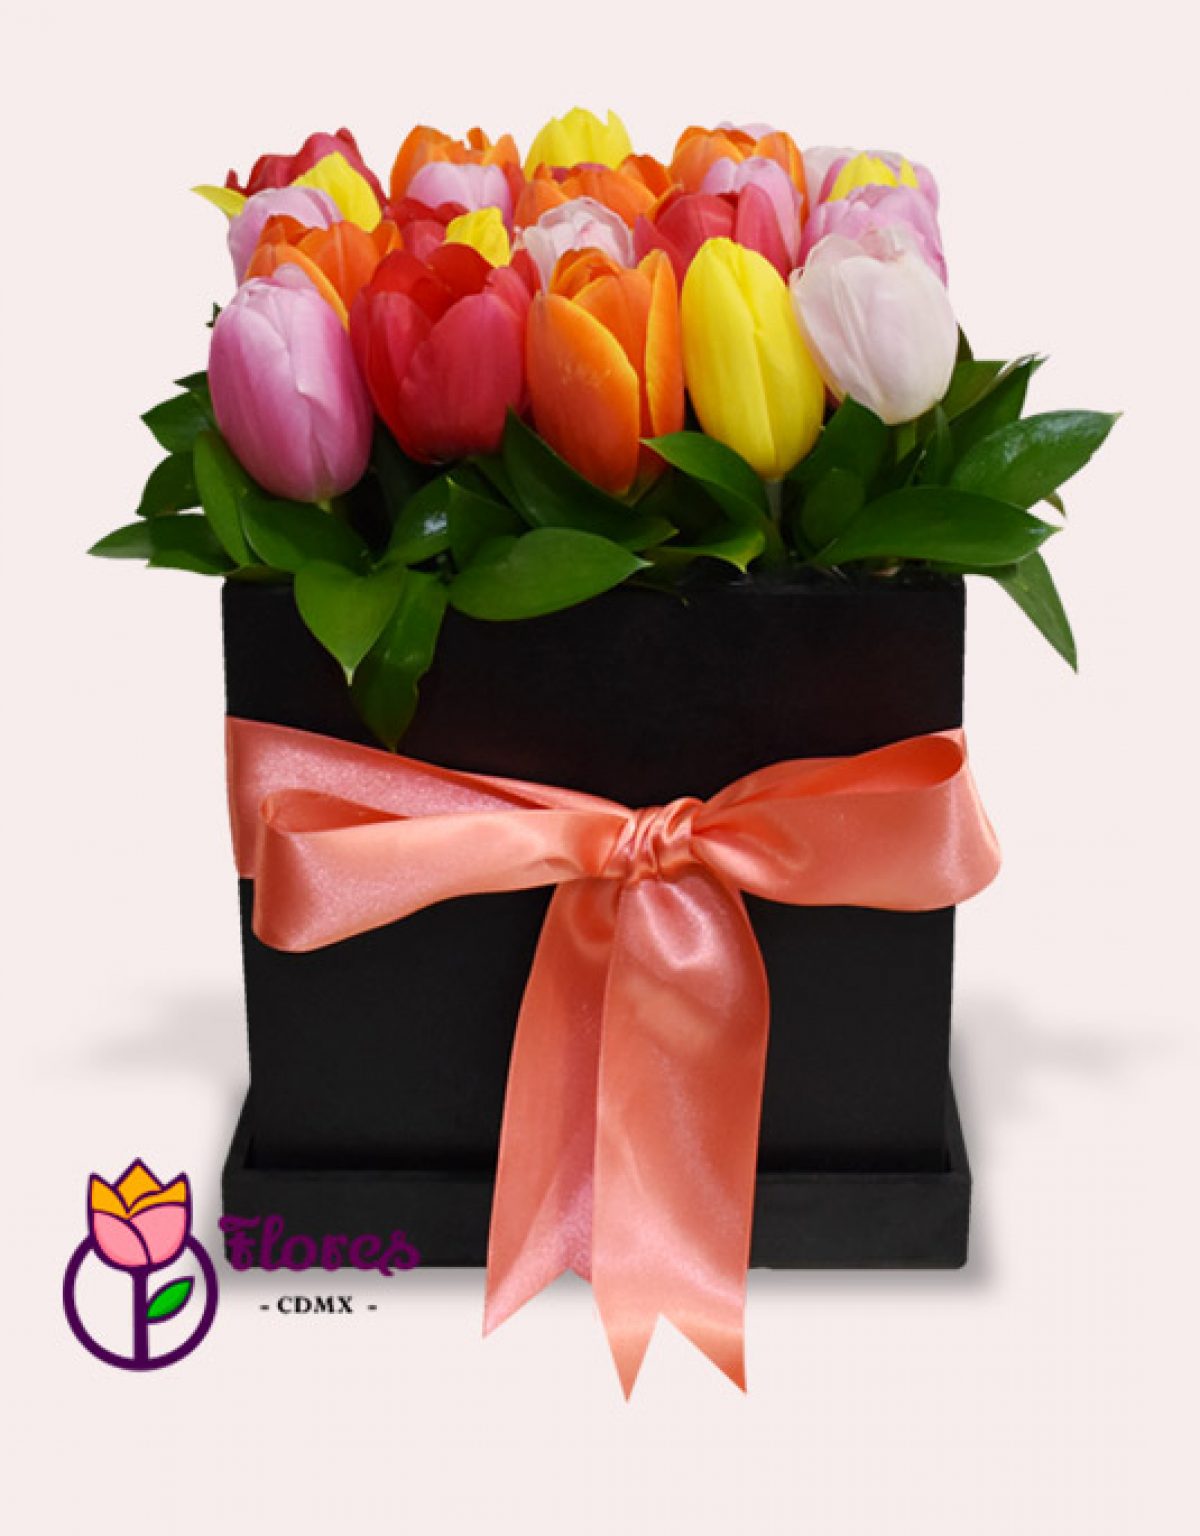 Arreglos de flores en caja de rosas, tulipanes, girasoles Envió gratis CDMX